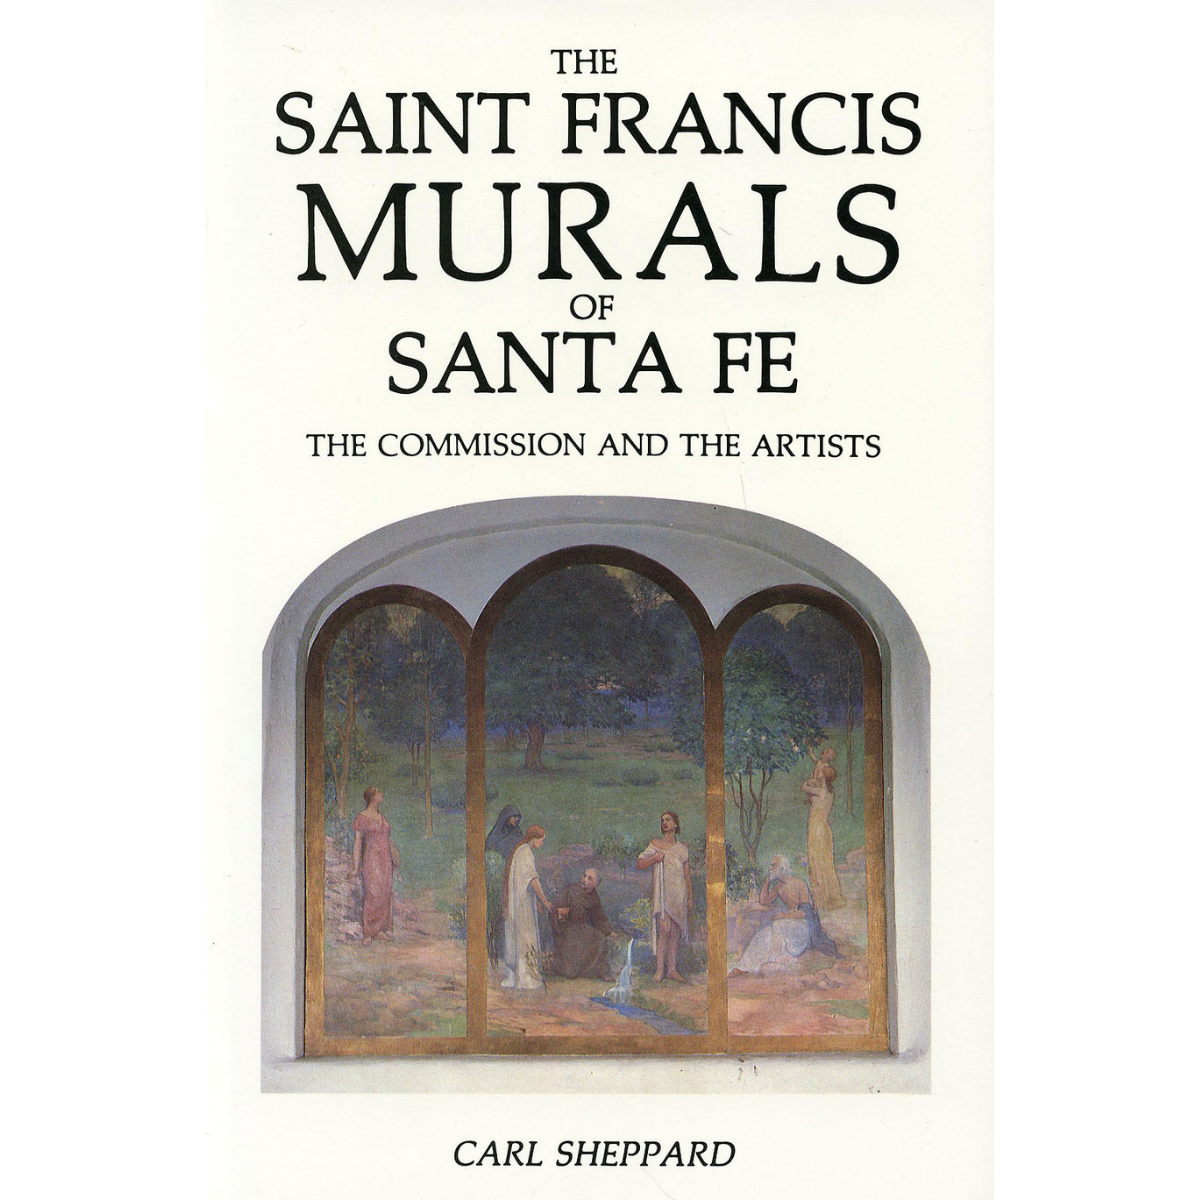 The Saint Francis Murals of Santa Fe